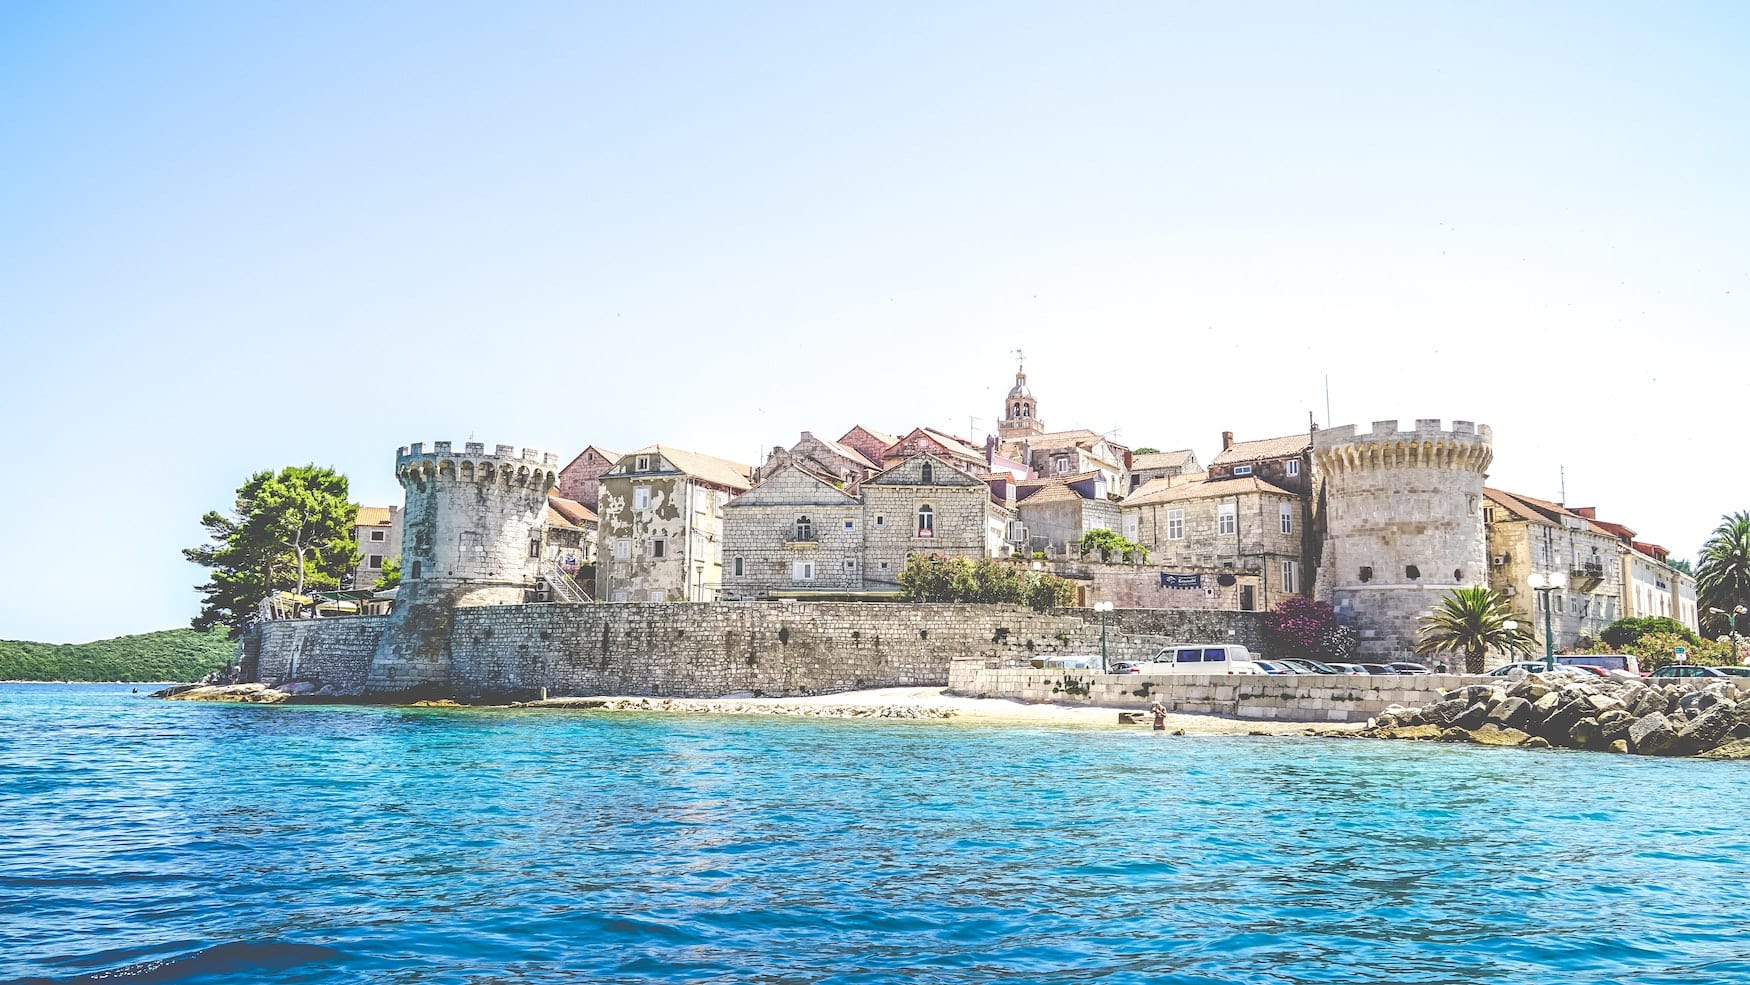 Altstadt auf der Insel Kordula in Kroatien